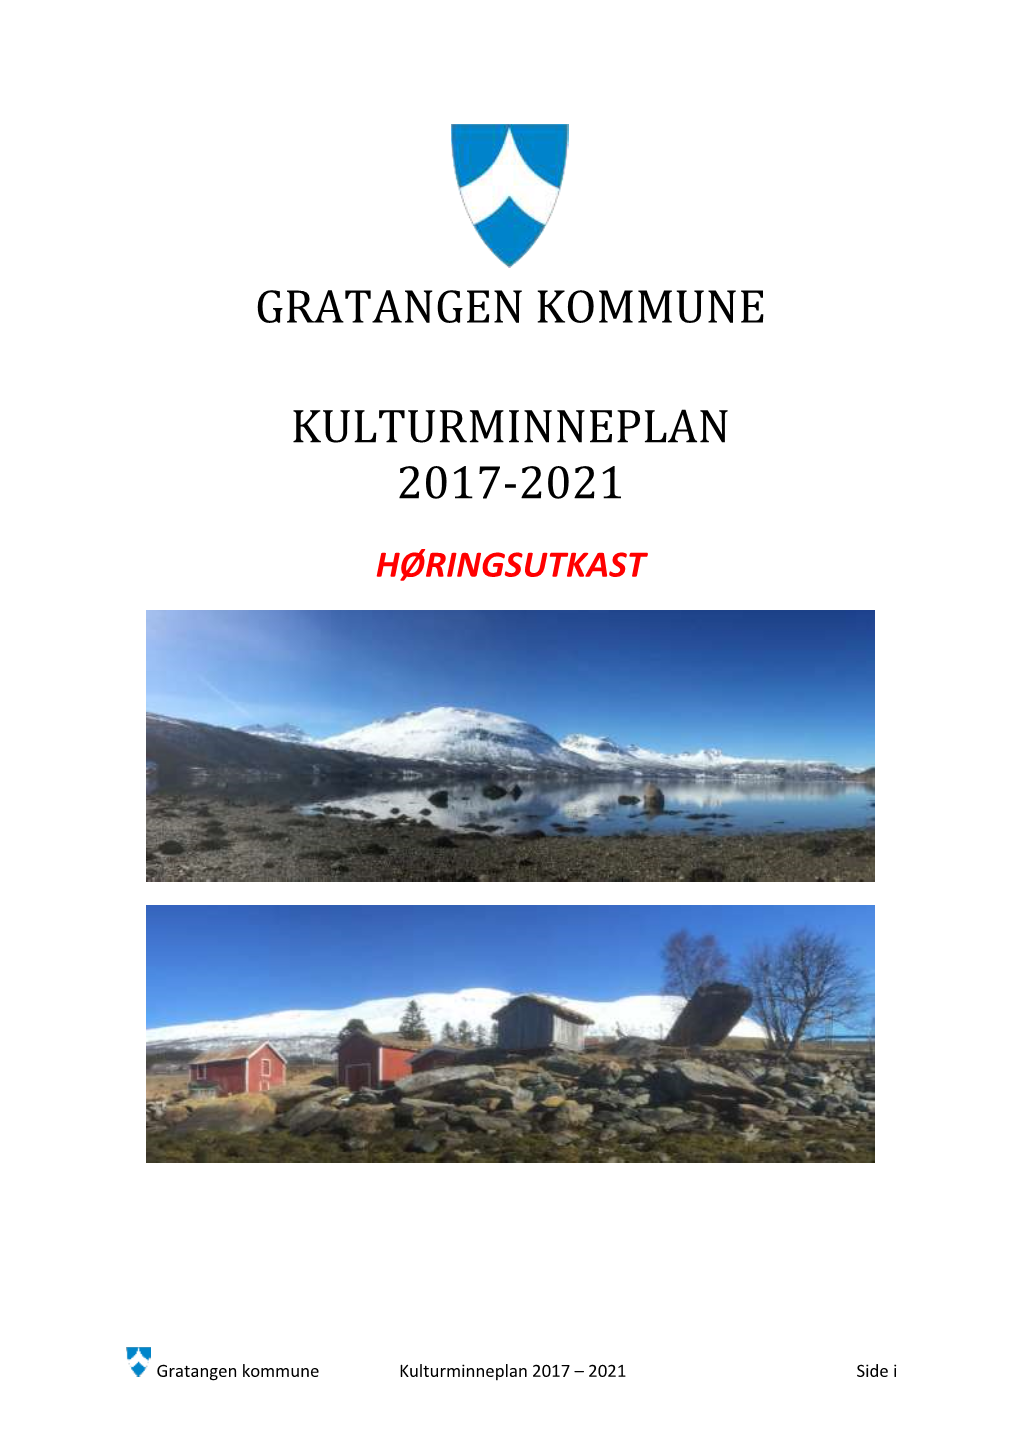 Gratangen Kommune Kulturminneplan 2017-2021